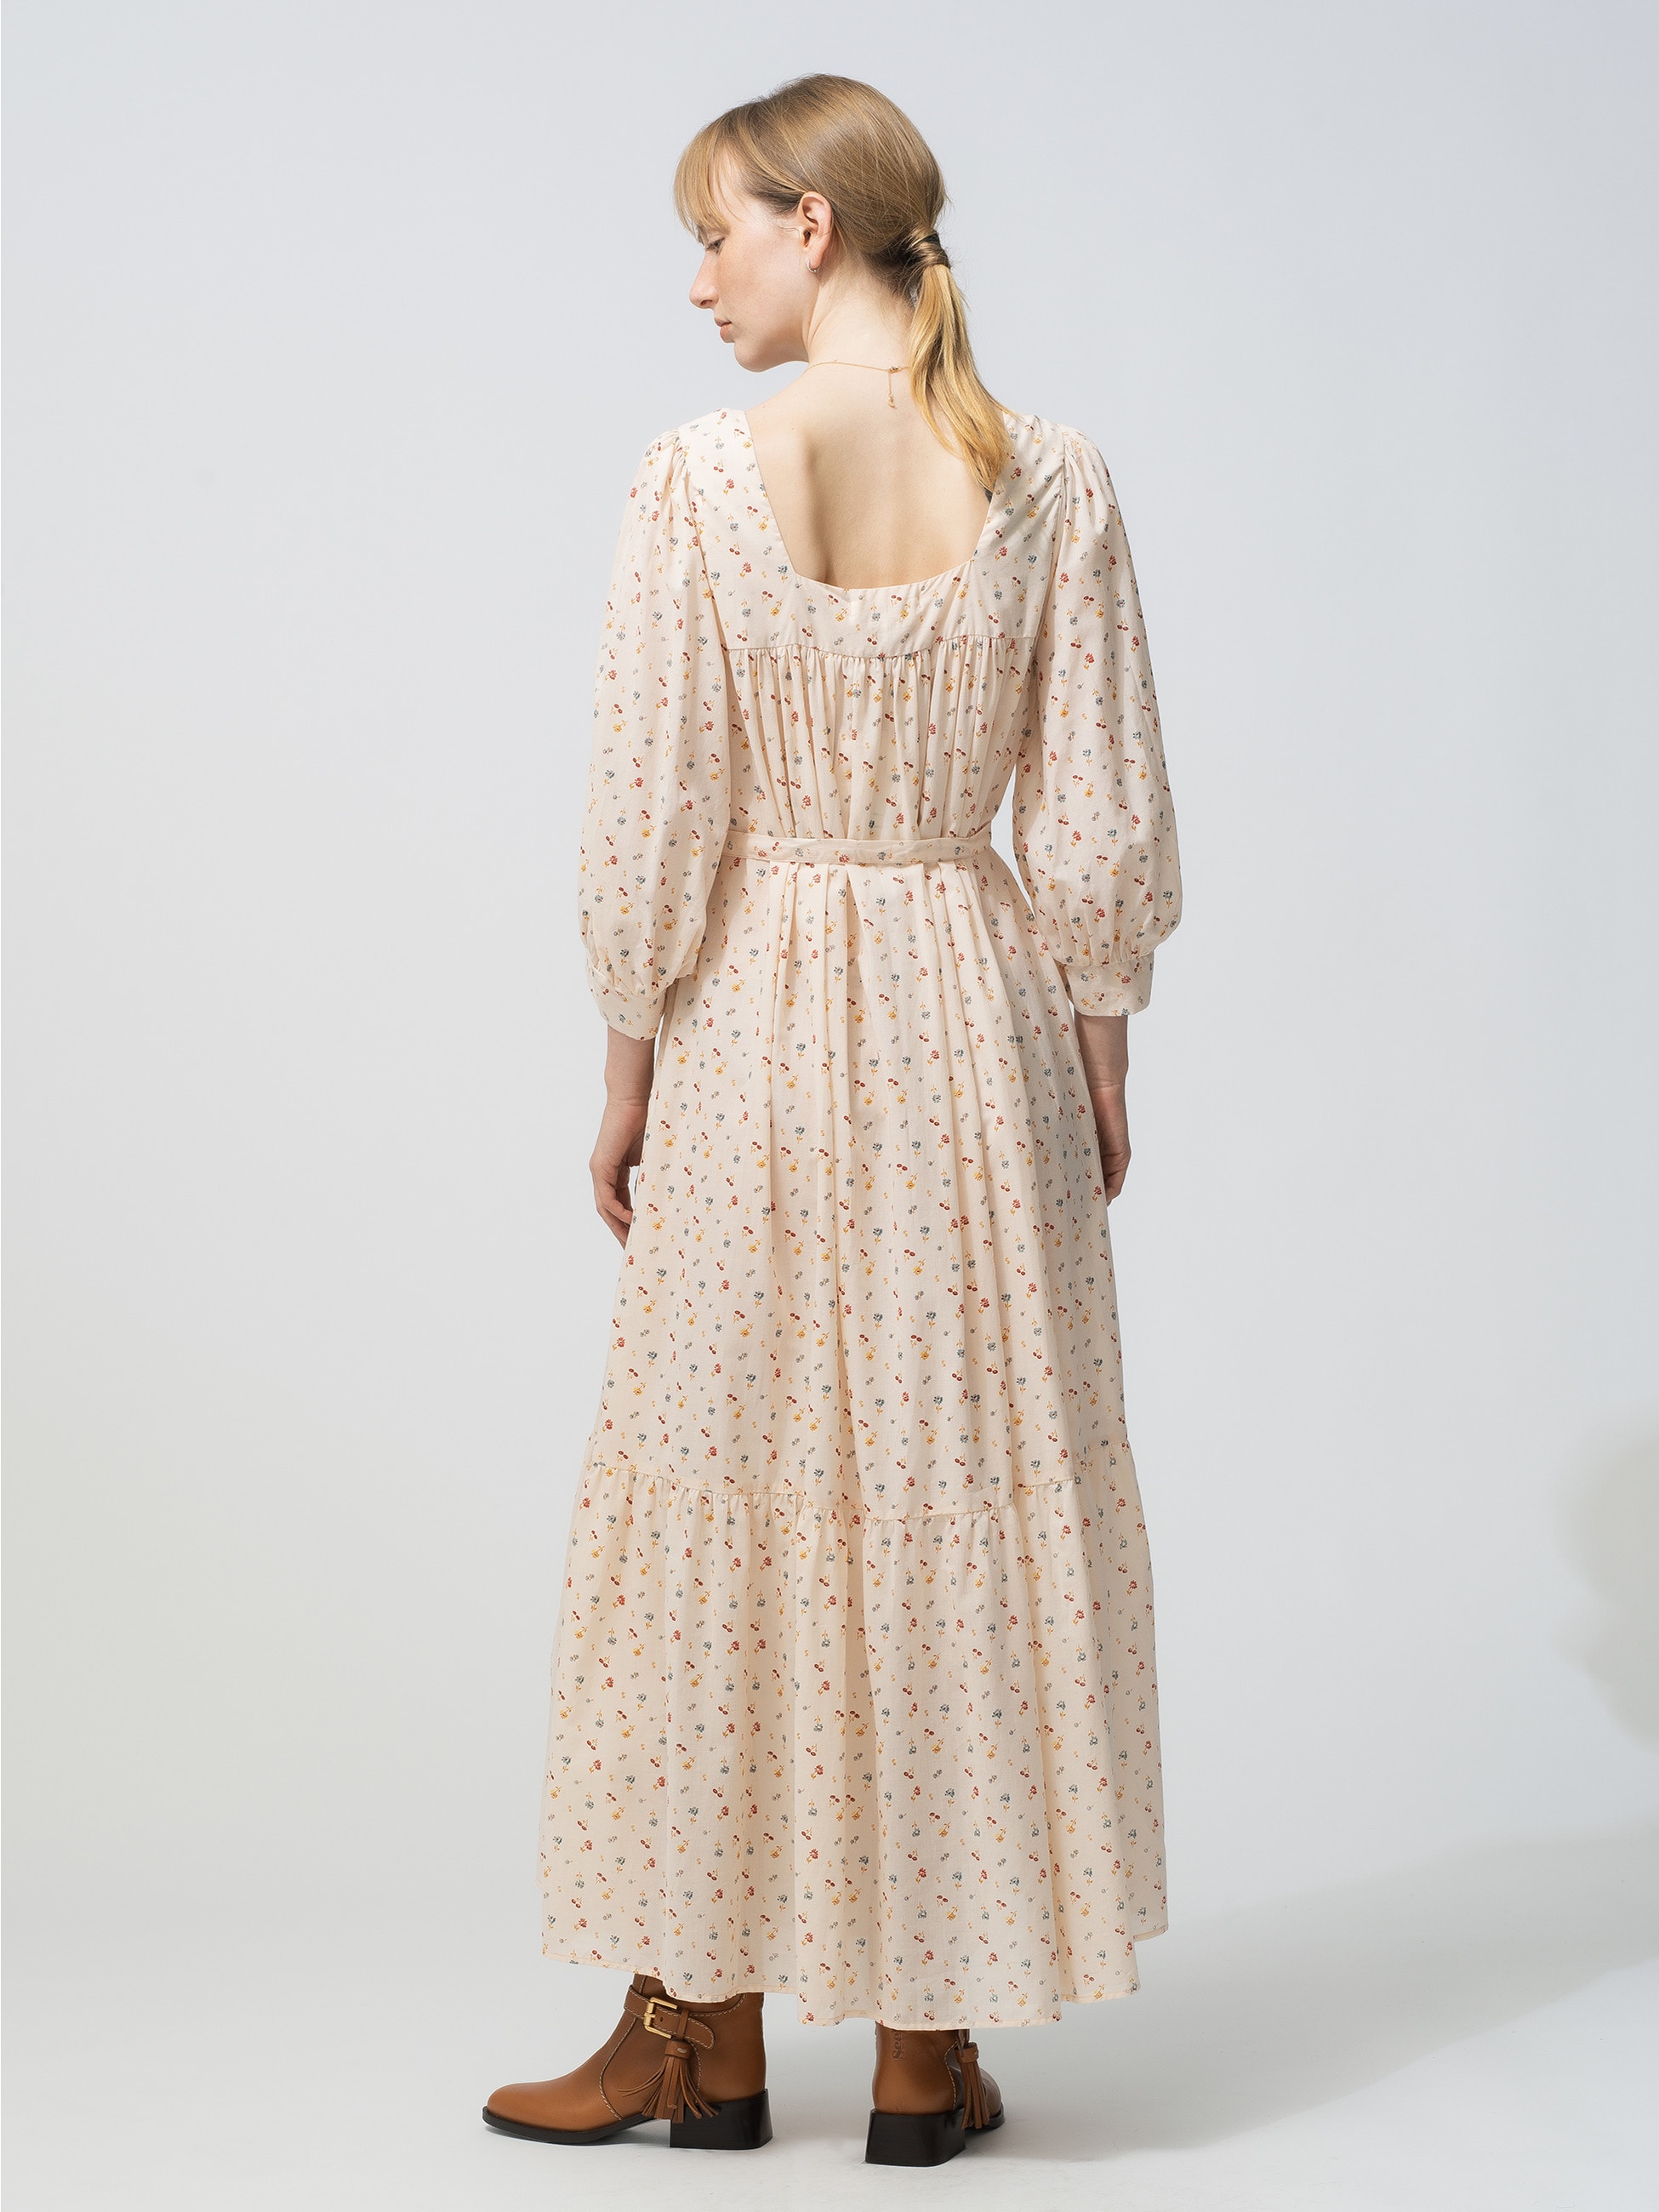 The Bianca Flower Print Dress (cream)